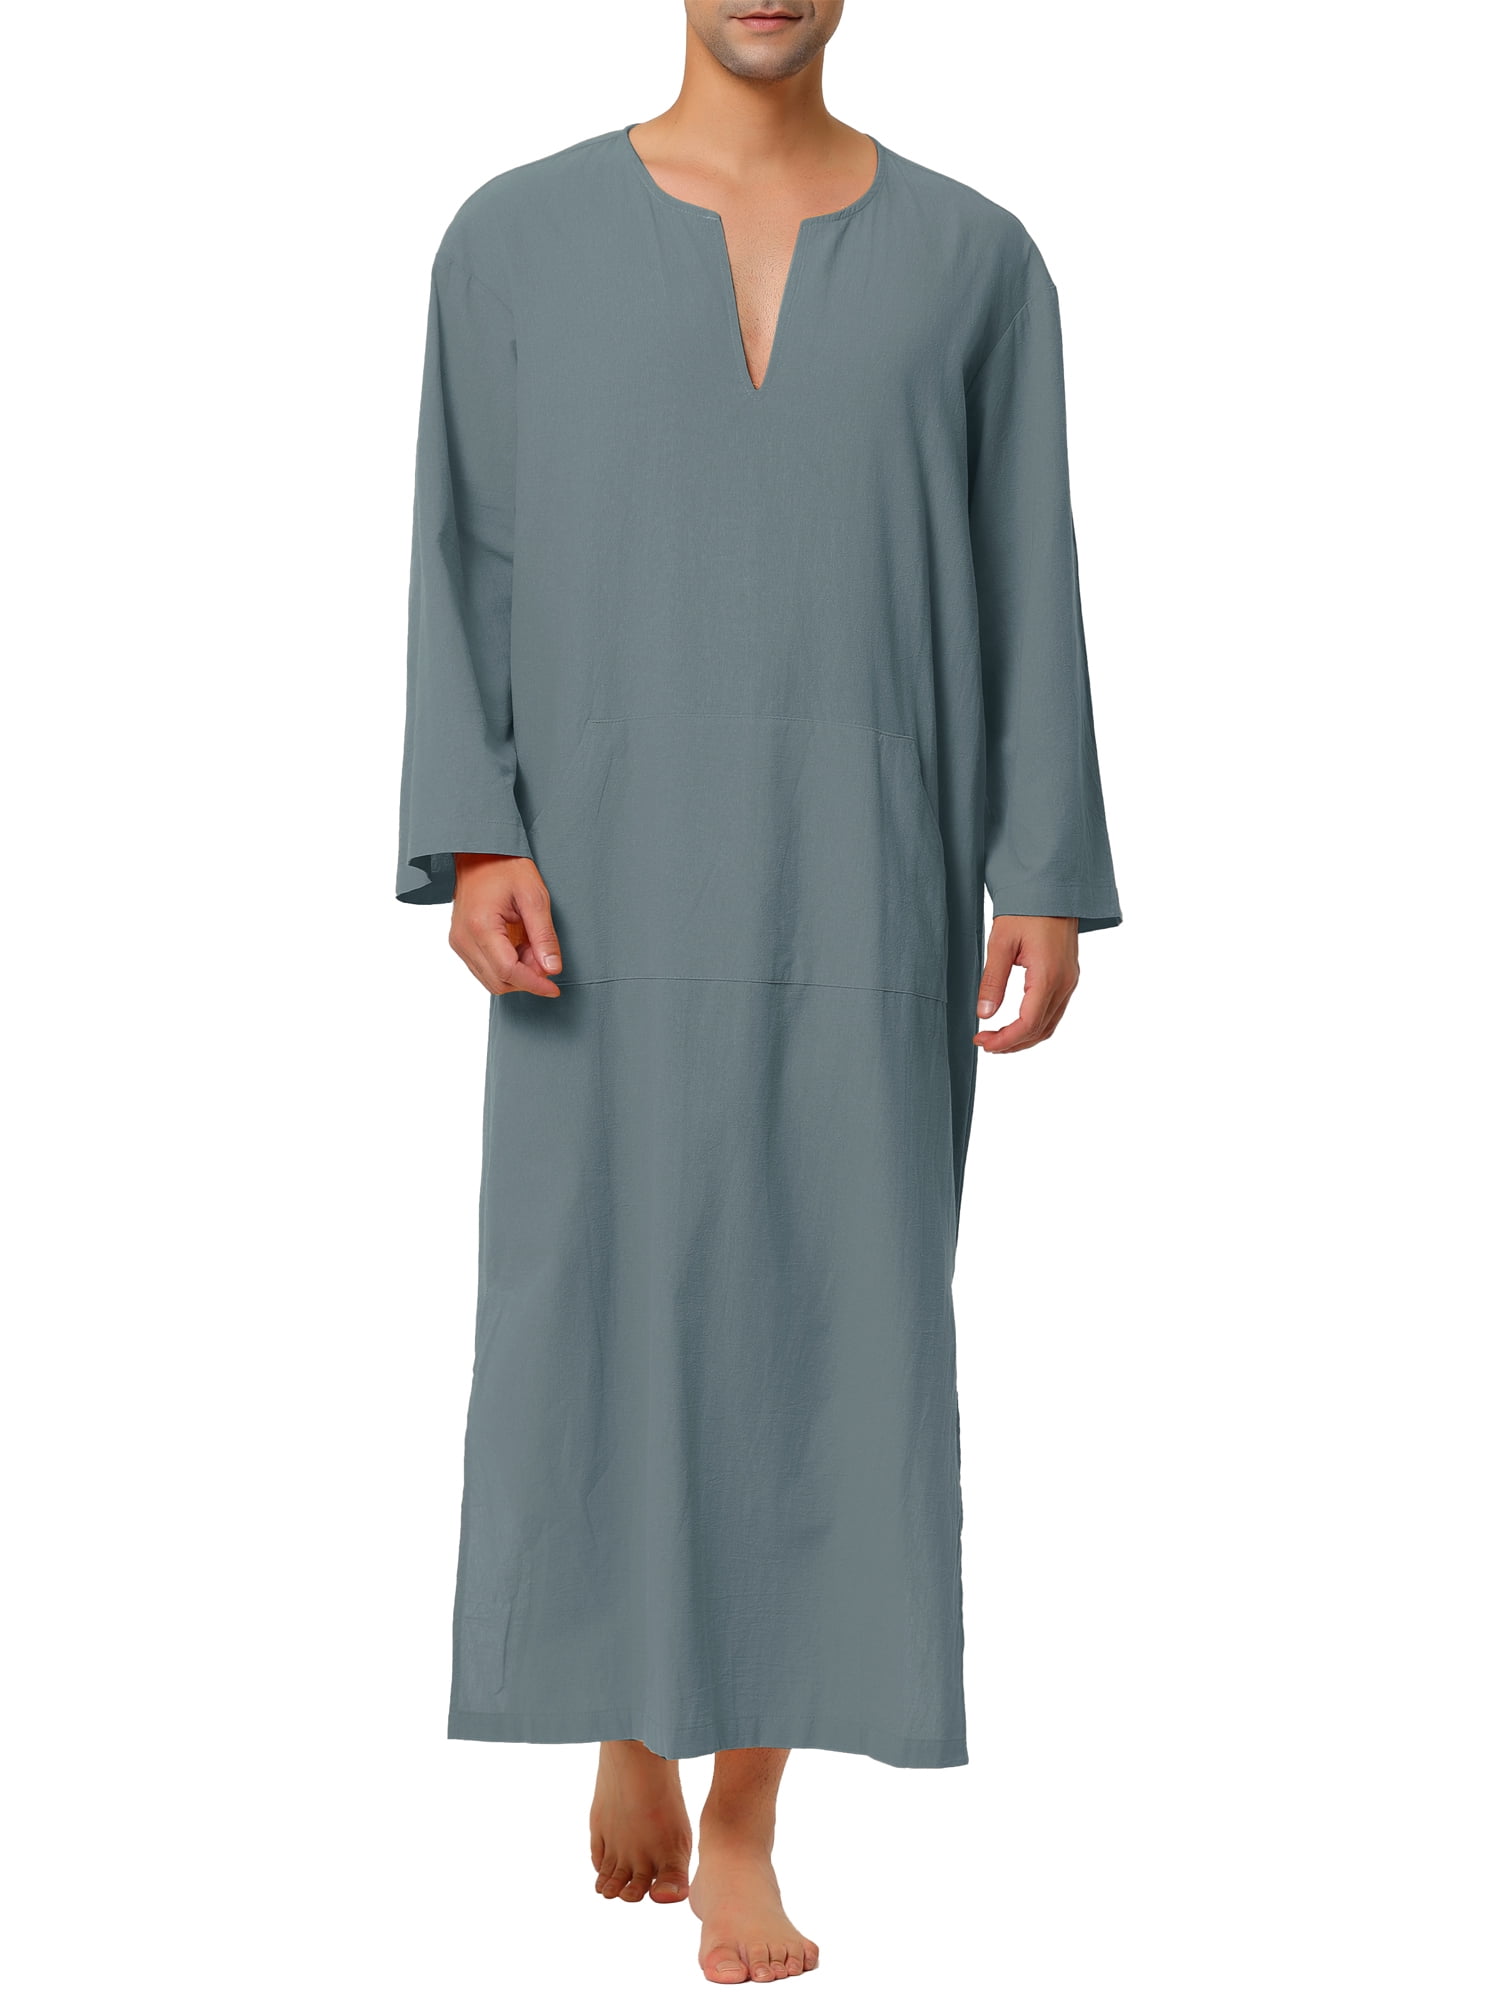 Lars Amadeus Men's Pajamas Cotton Sleepwear V-Neck Side Split Long Gown ...